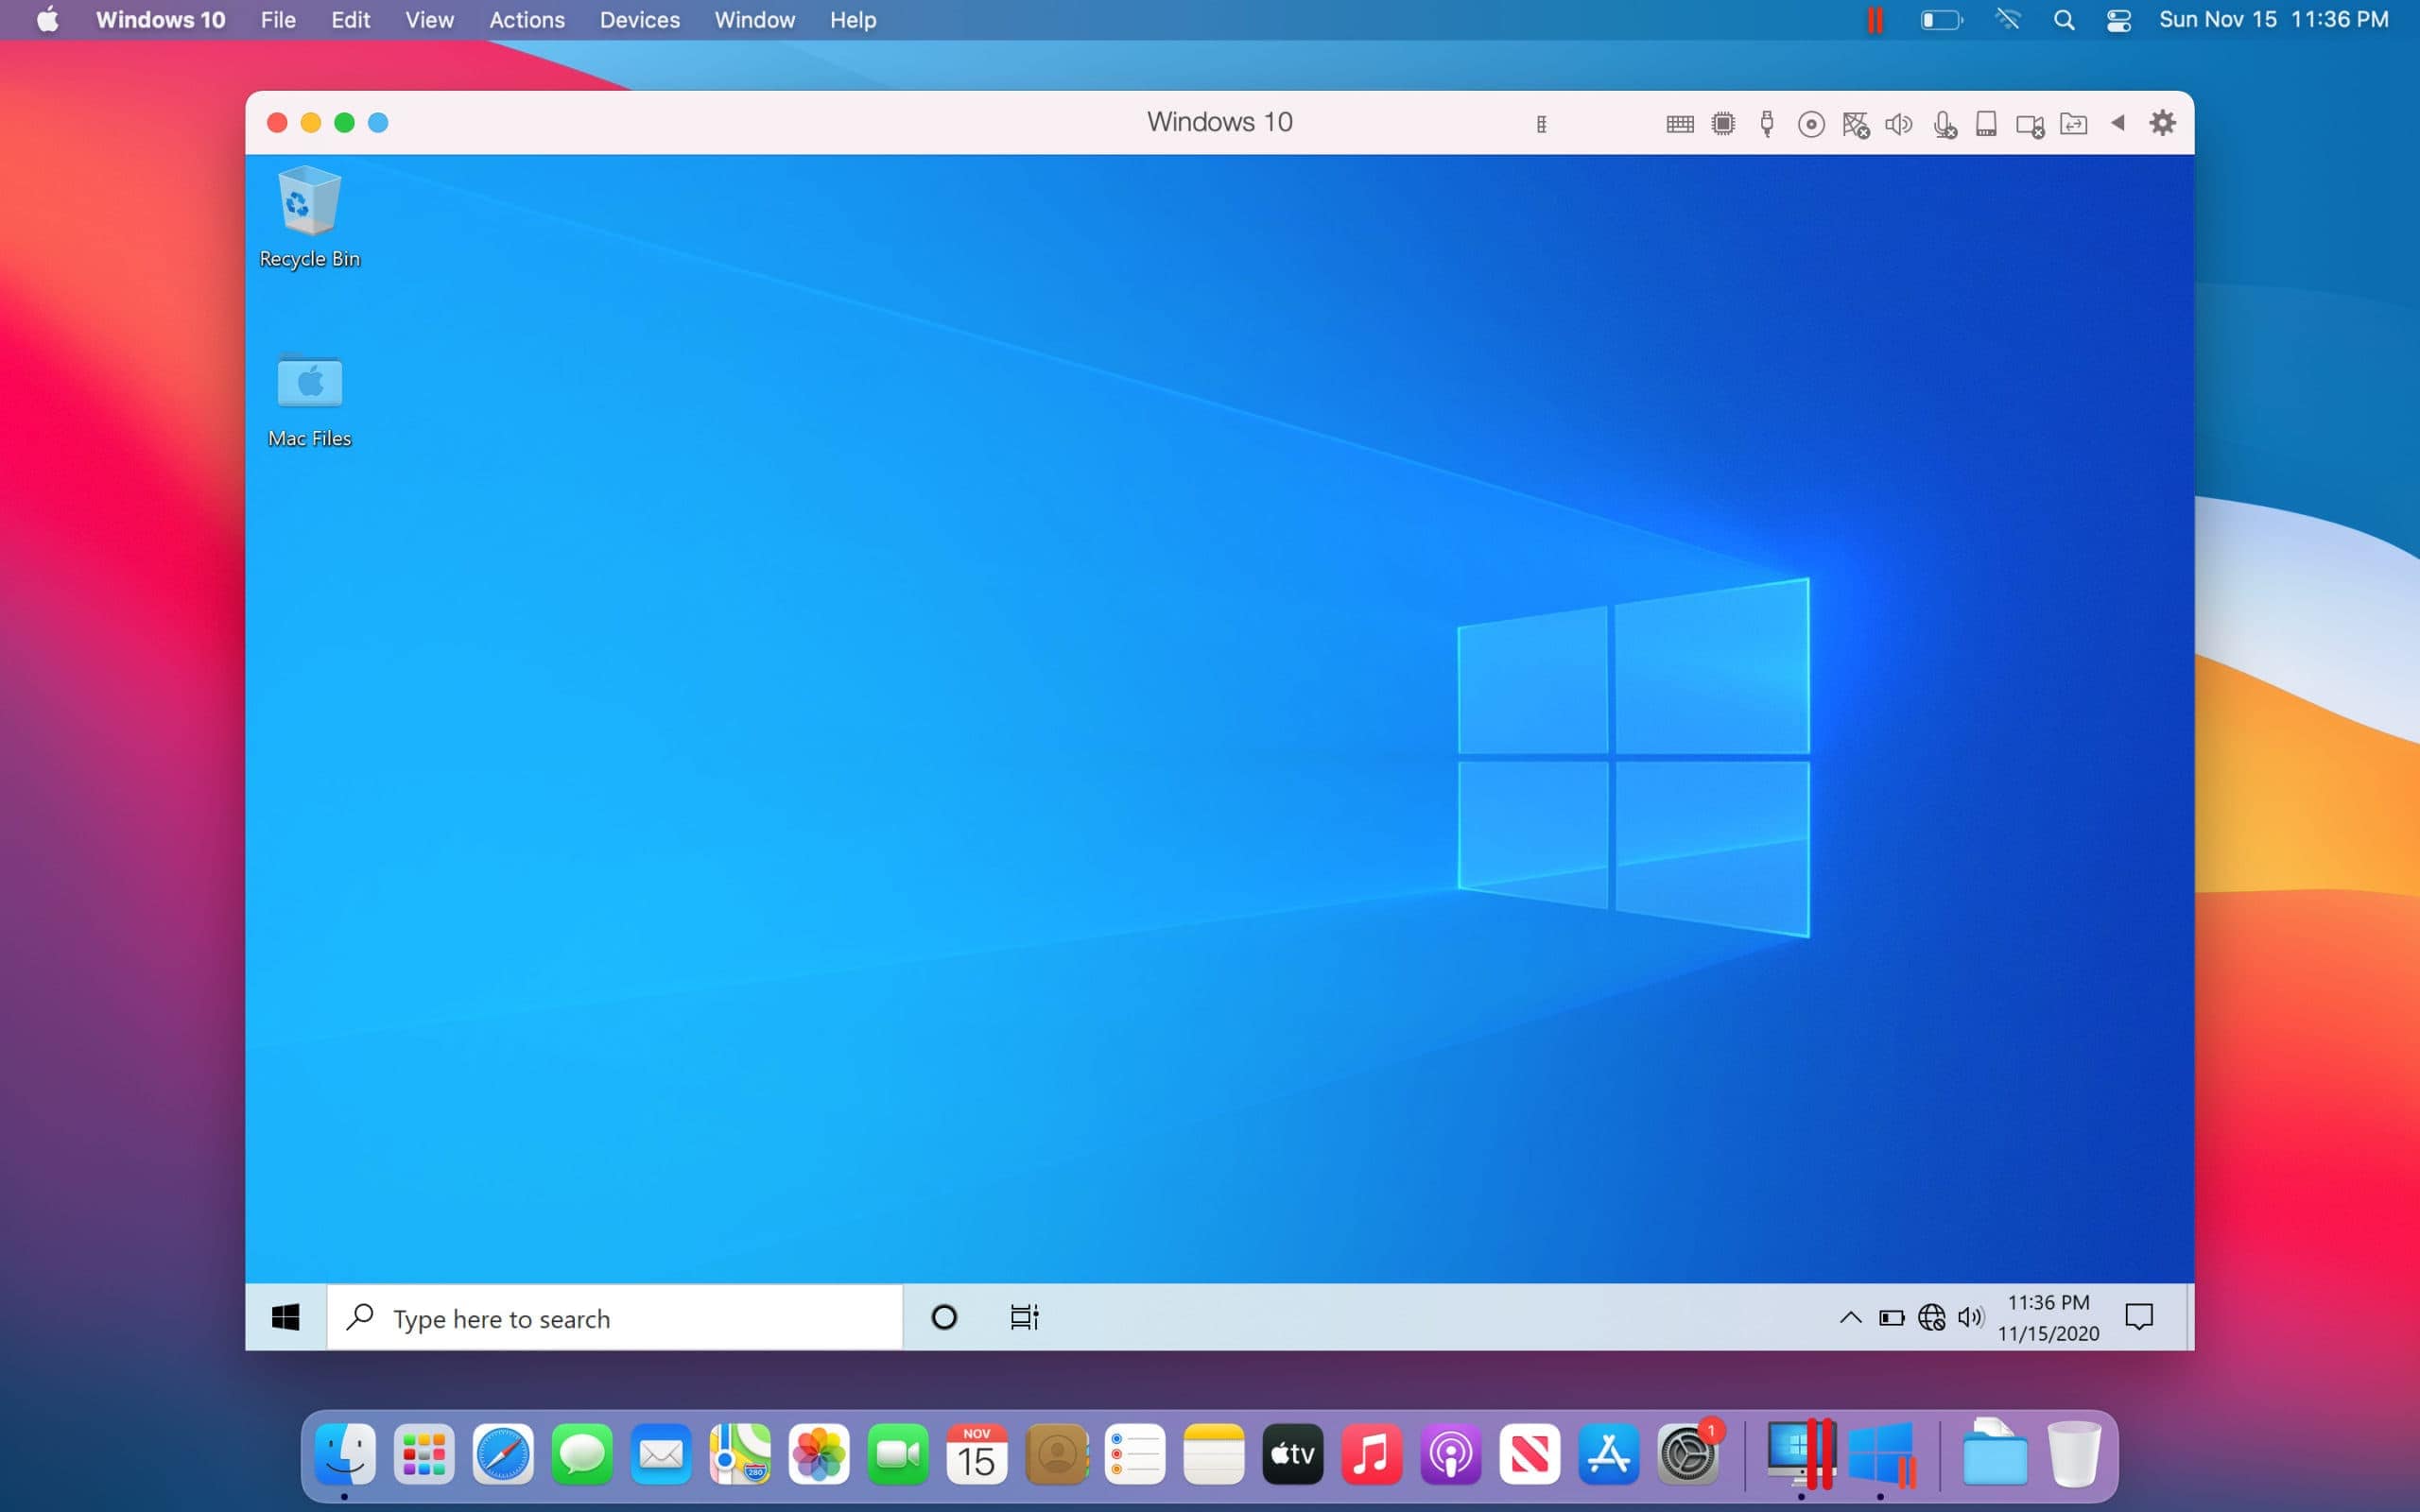 virtual machine parallels desktop 9 for mac windows